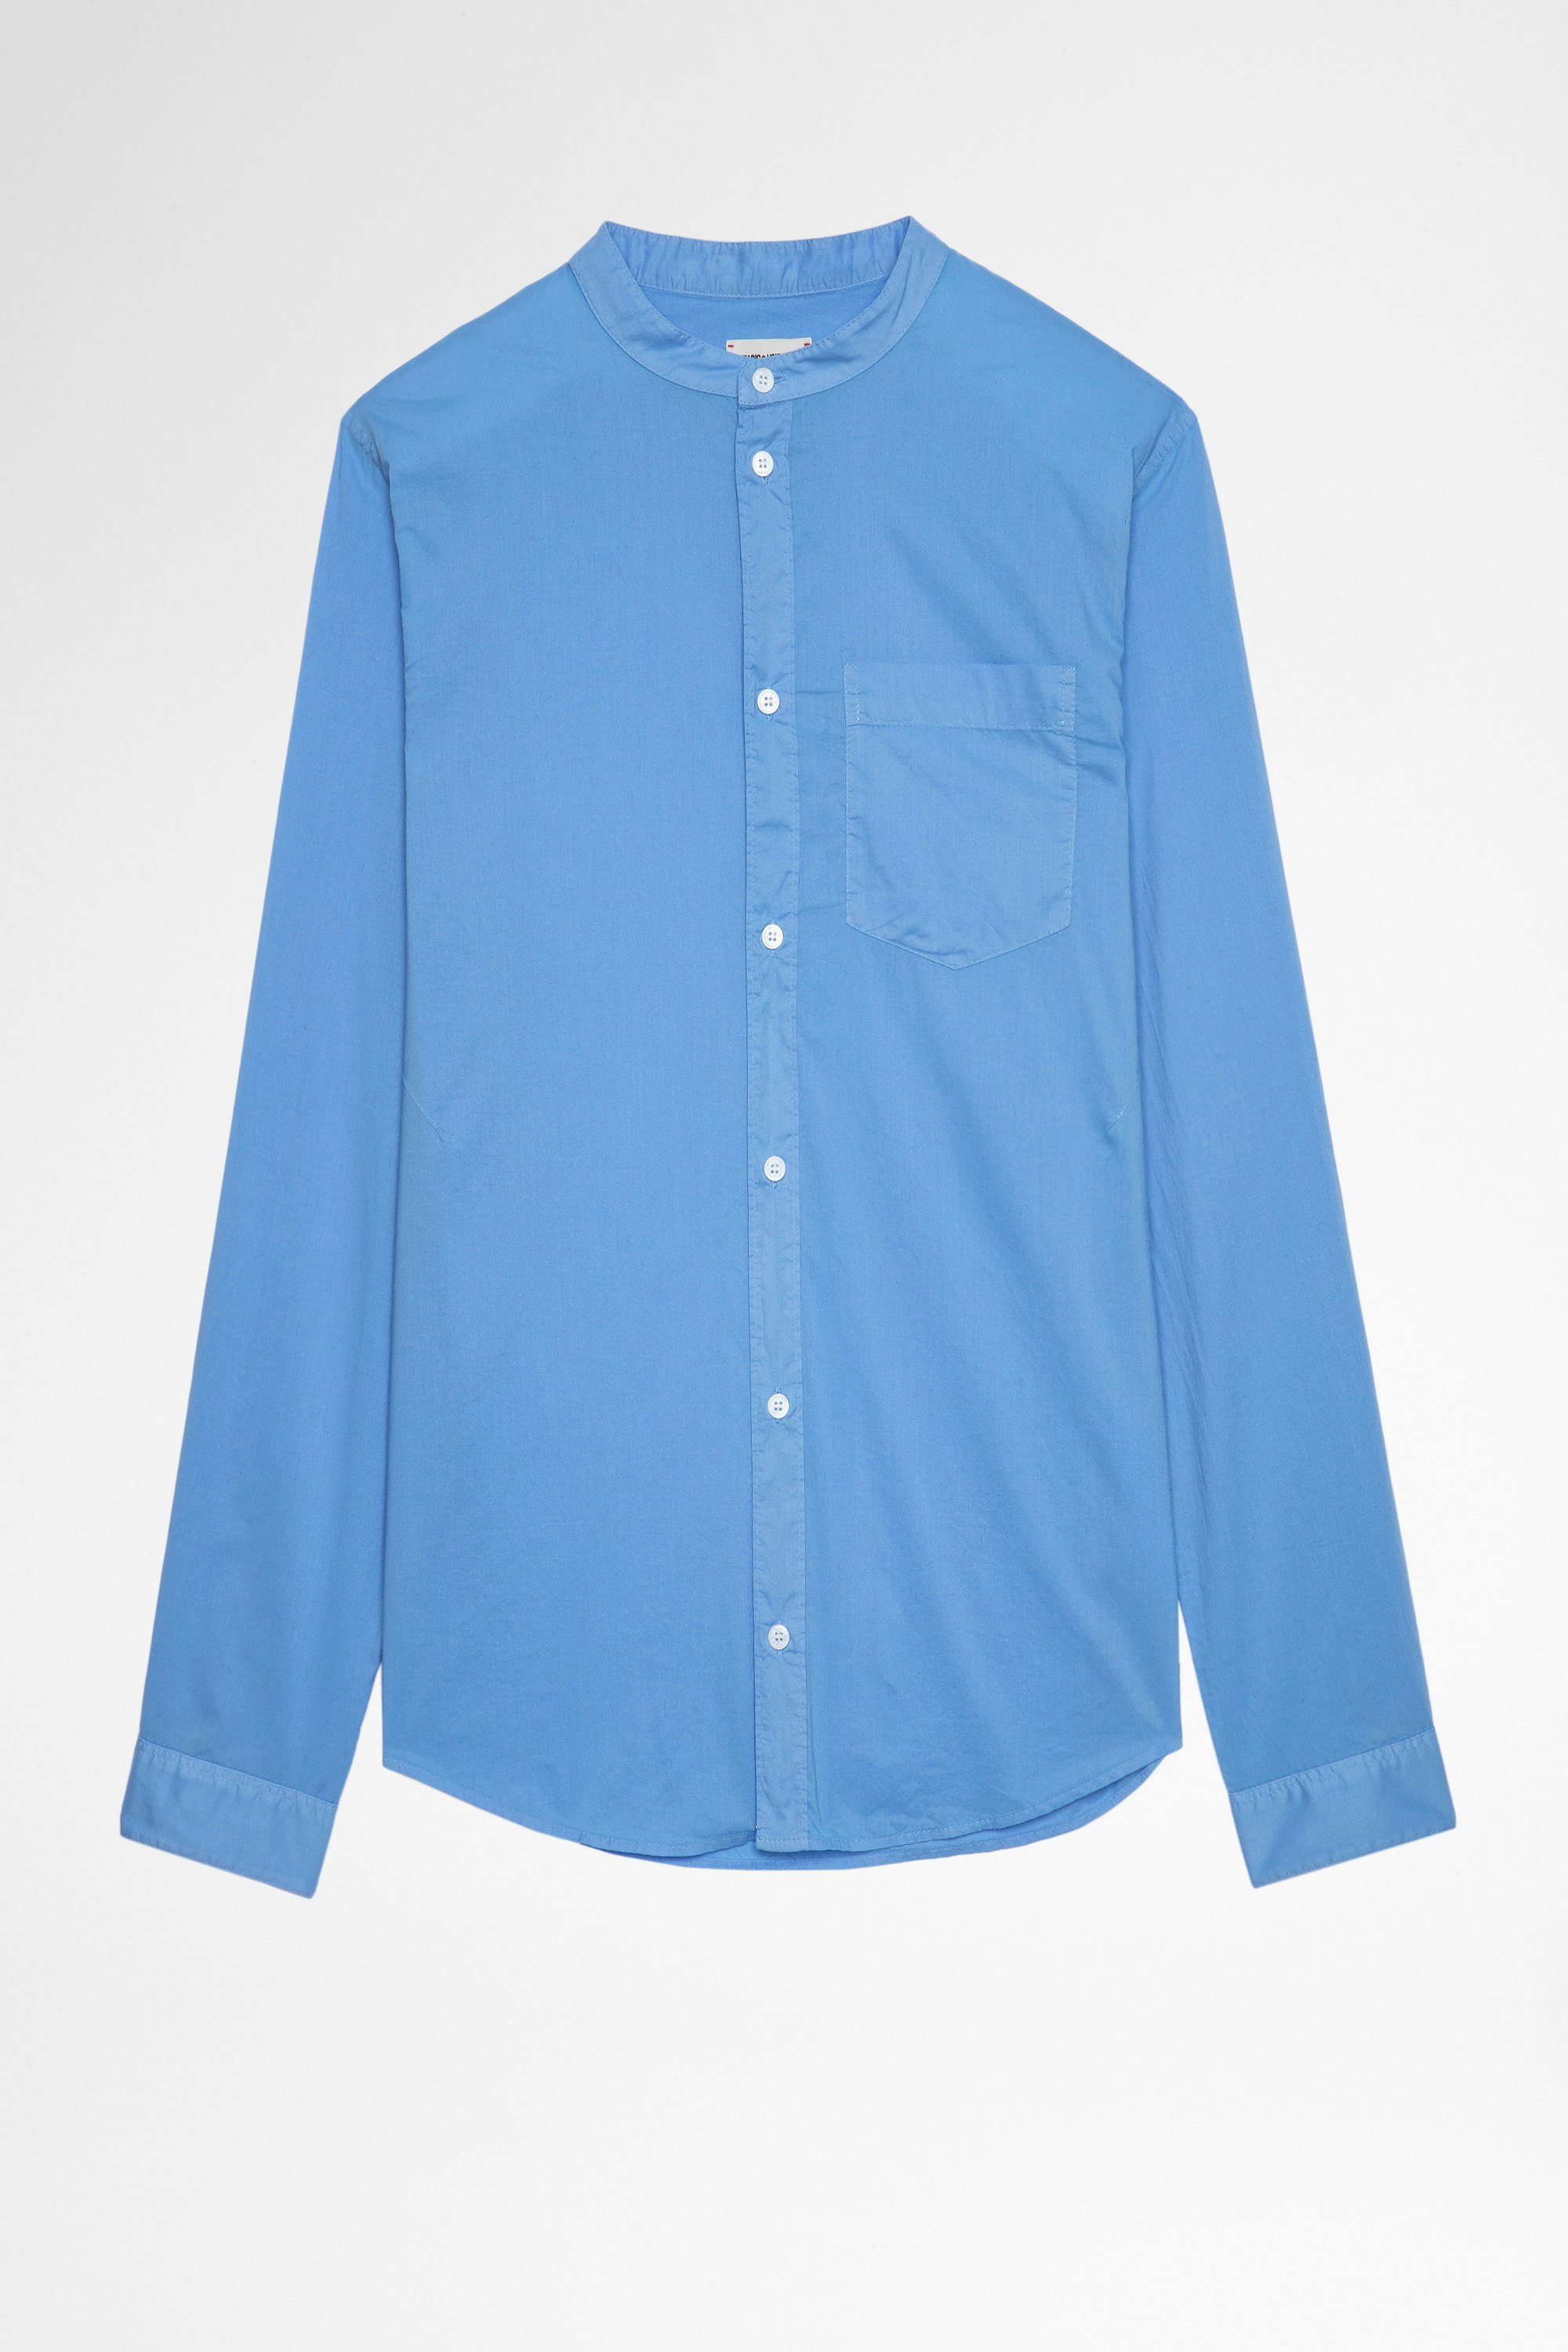 Camisa Thibaut Camisa de algodón azul cielo para hombre